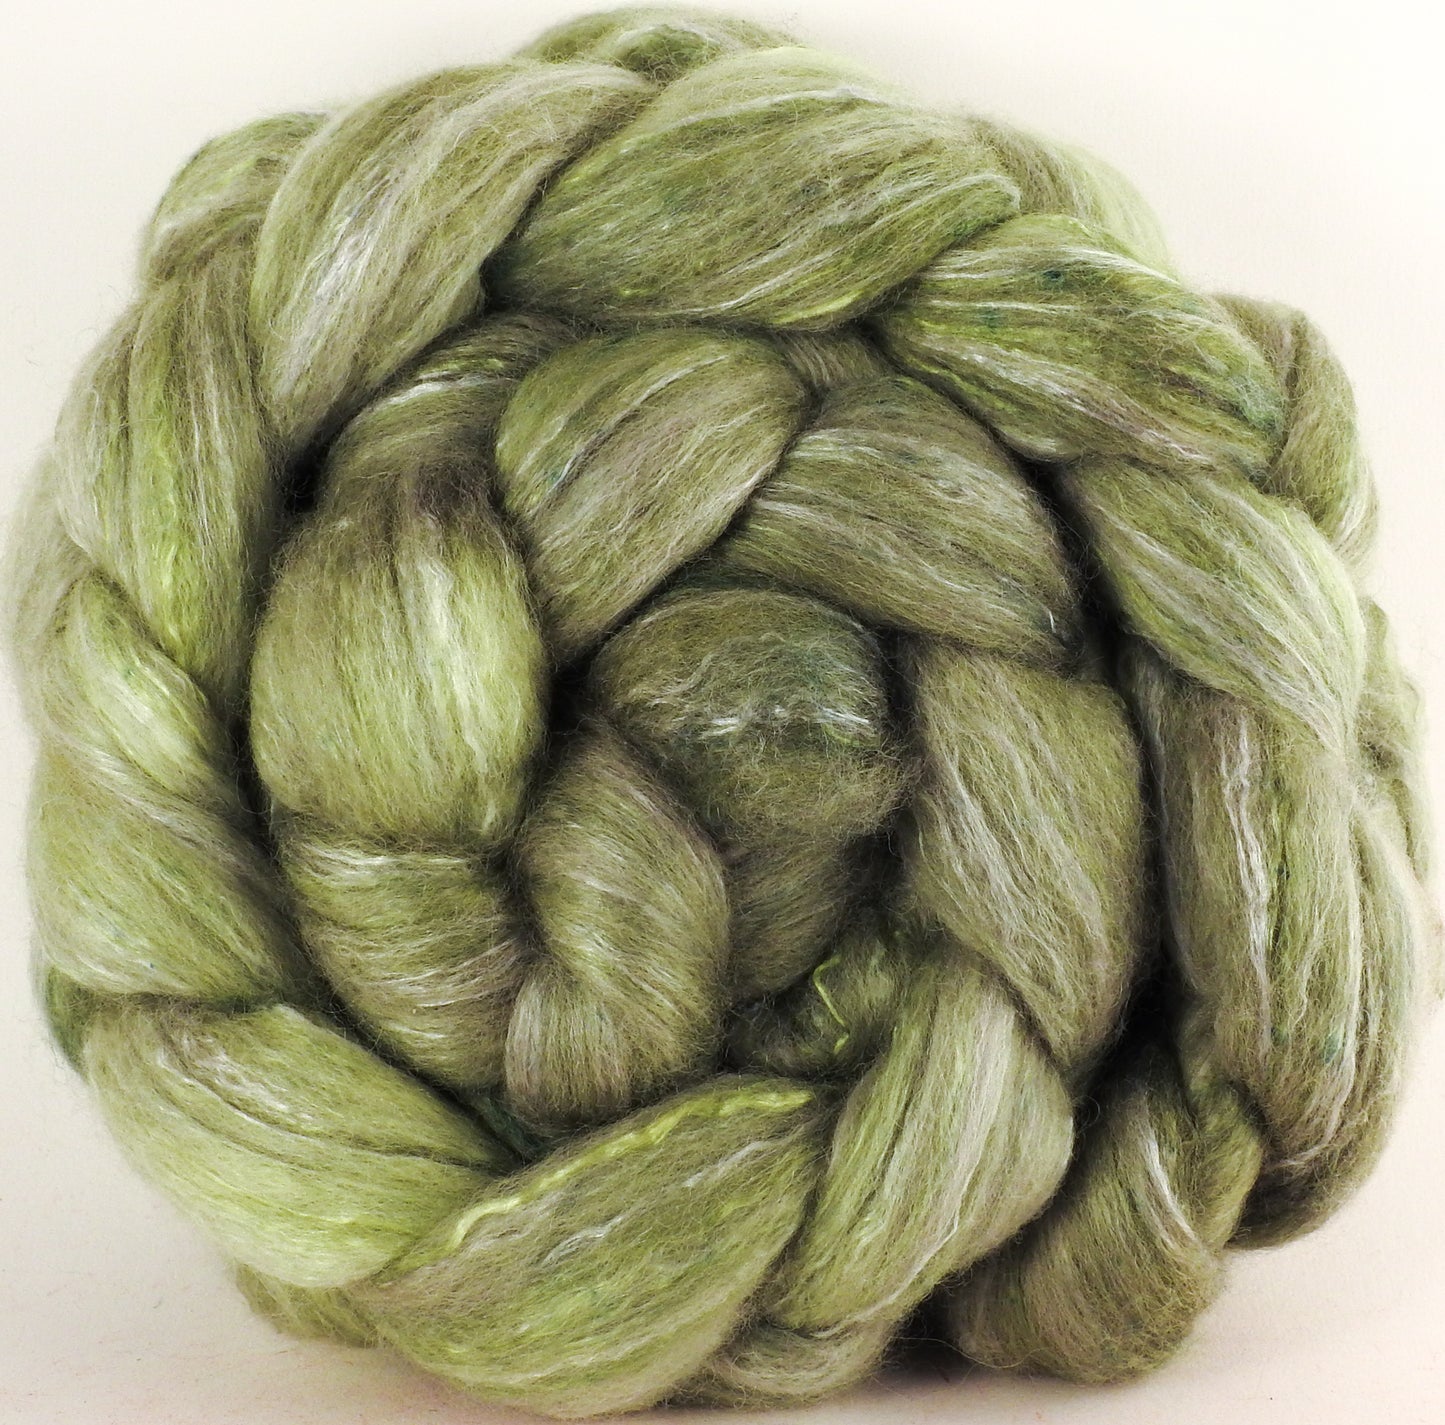 Batt in a Braid #45 - Lichen (5.8 oz.) - Corriedale/Mulberry Silk/Rose Fiber (60/20/20) - Inglenook Fibers